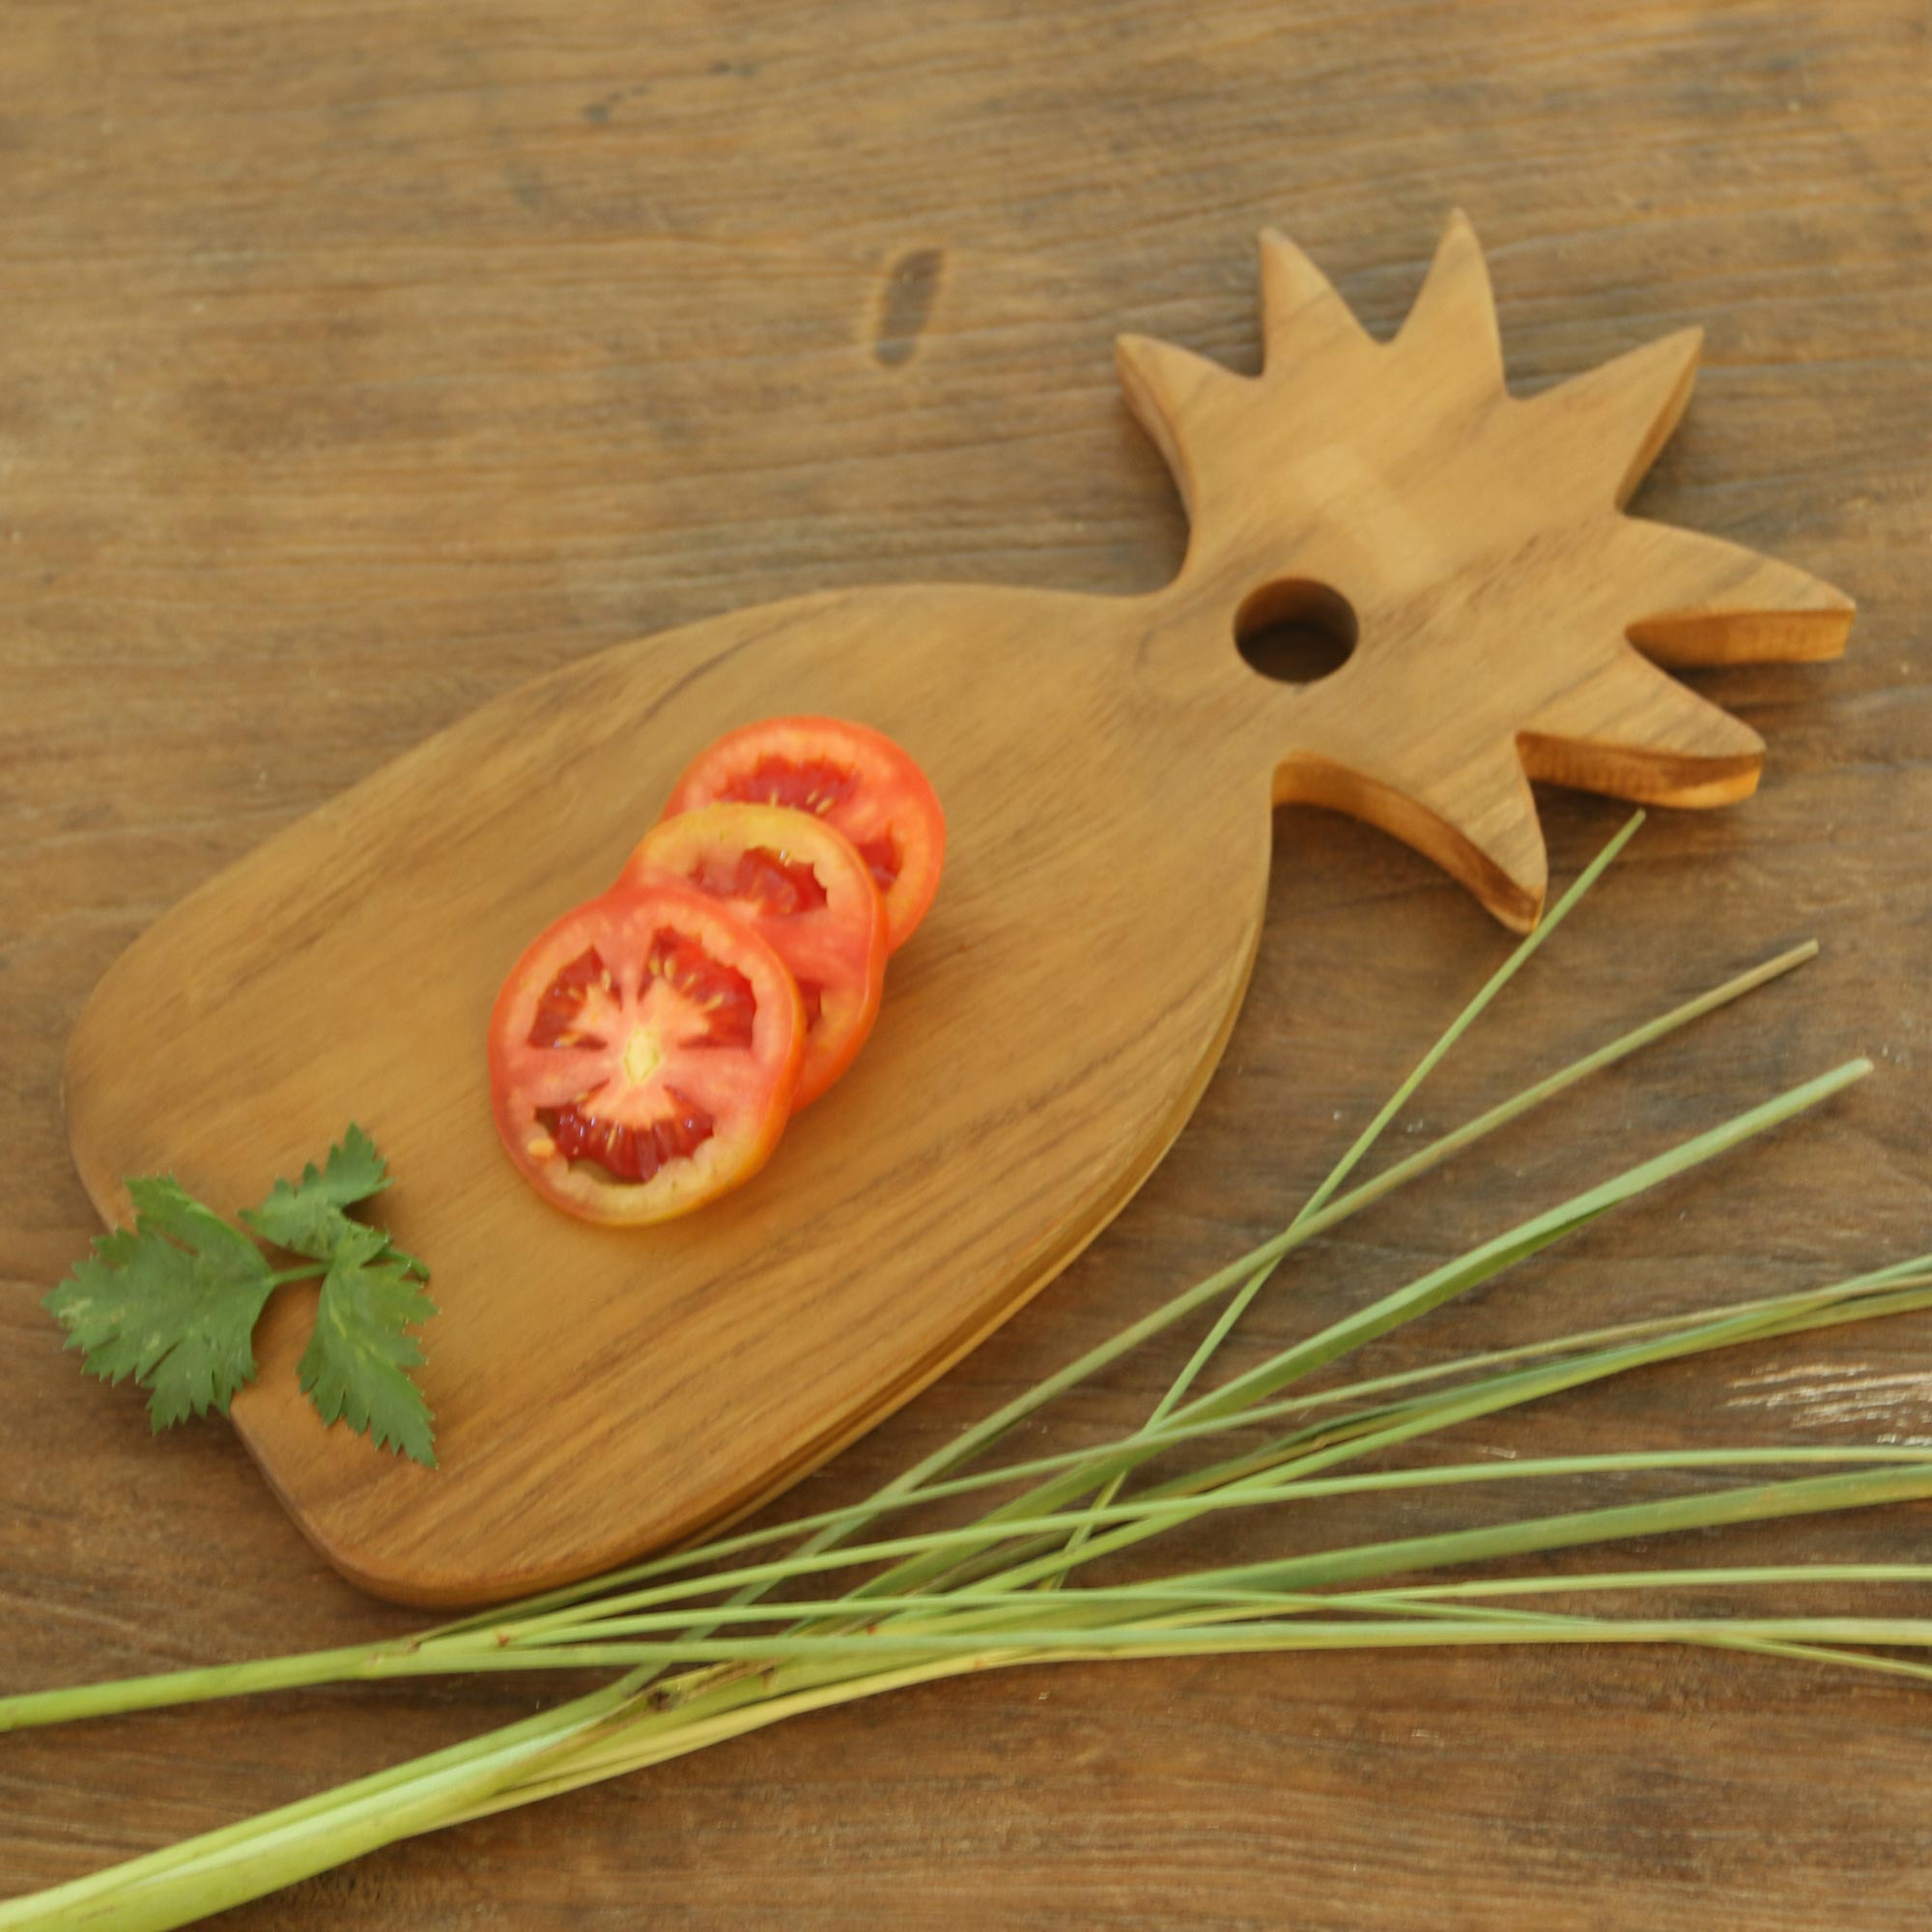 Hand Made Pineapple Teak Wood Cutting Board from Bali - Pineapple Feast